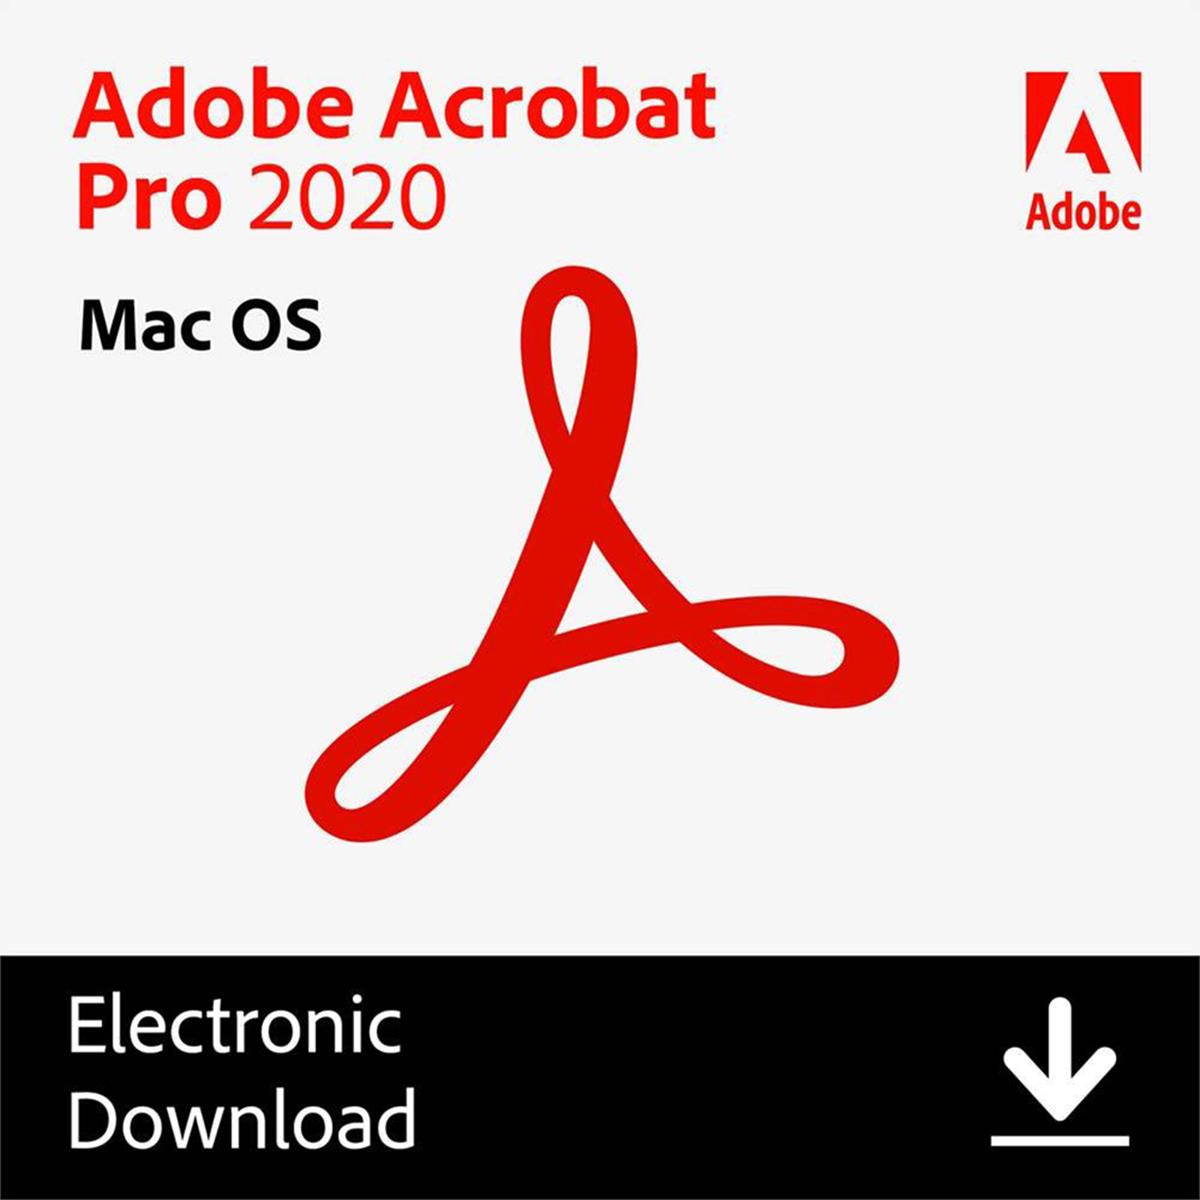 Image of Adobe Acrobat Pro 2020 Perpetual License for Macintosh